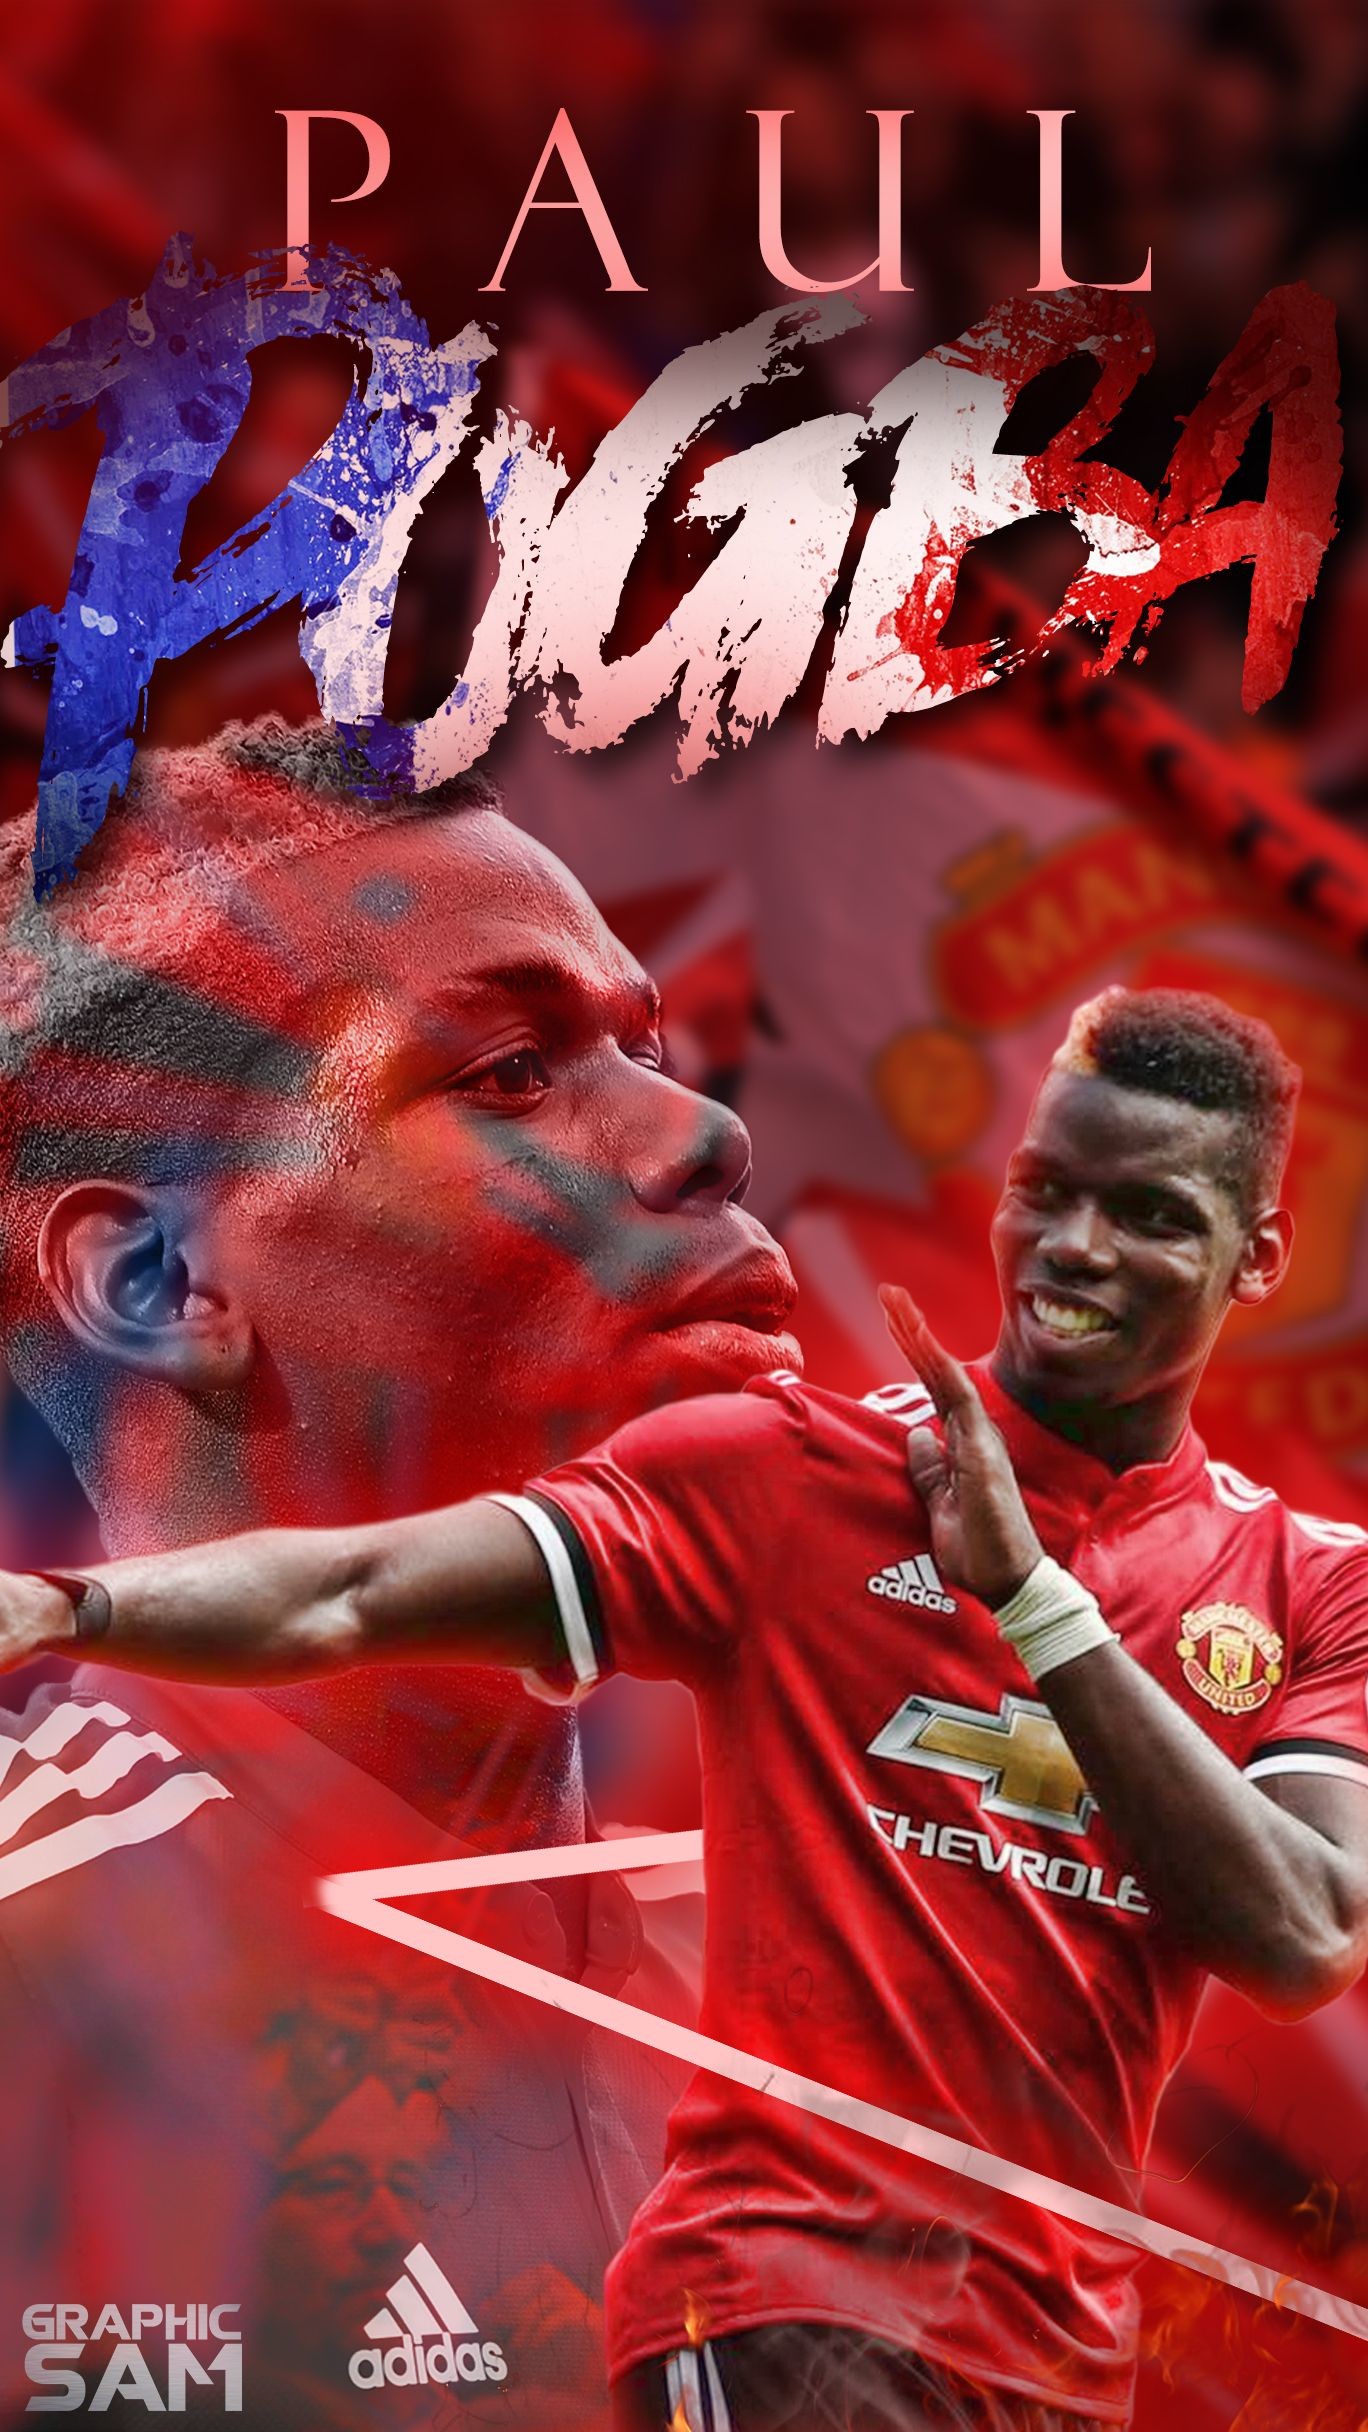 Paul Pogba Wallpaper Hd Manchester United - HD Wallpaper 